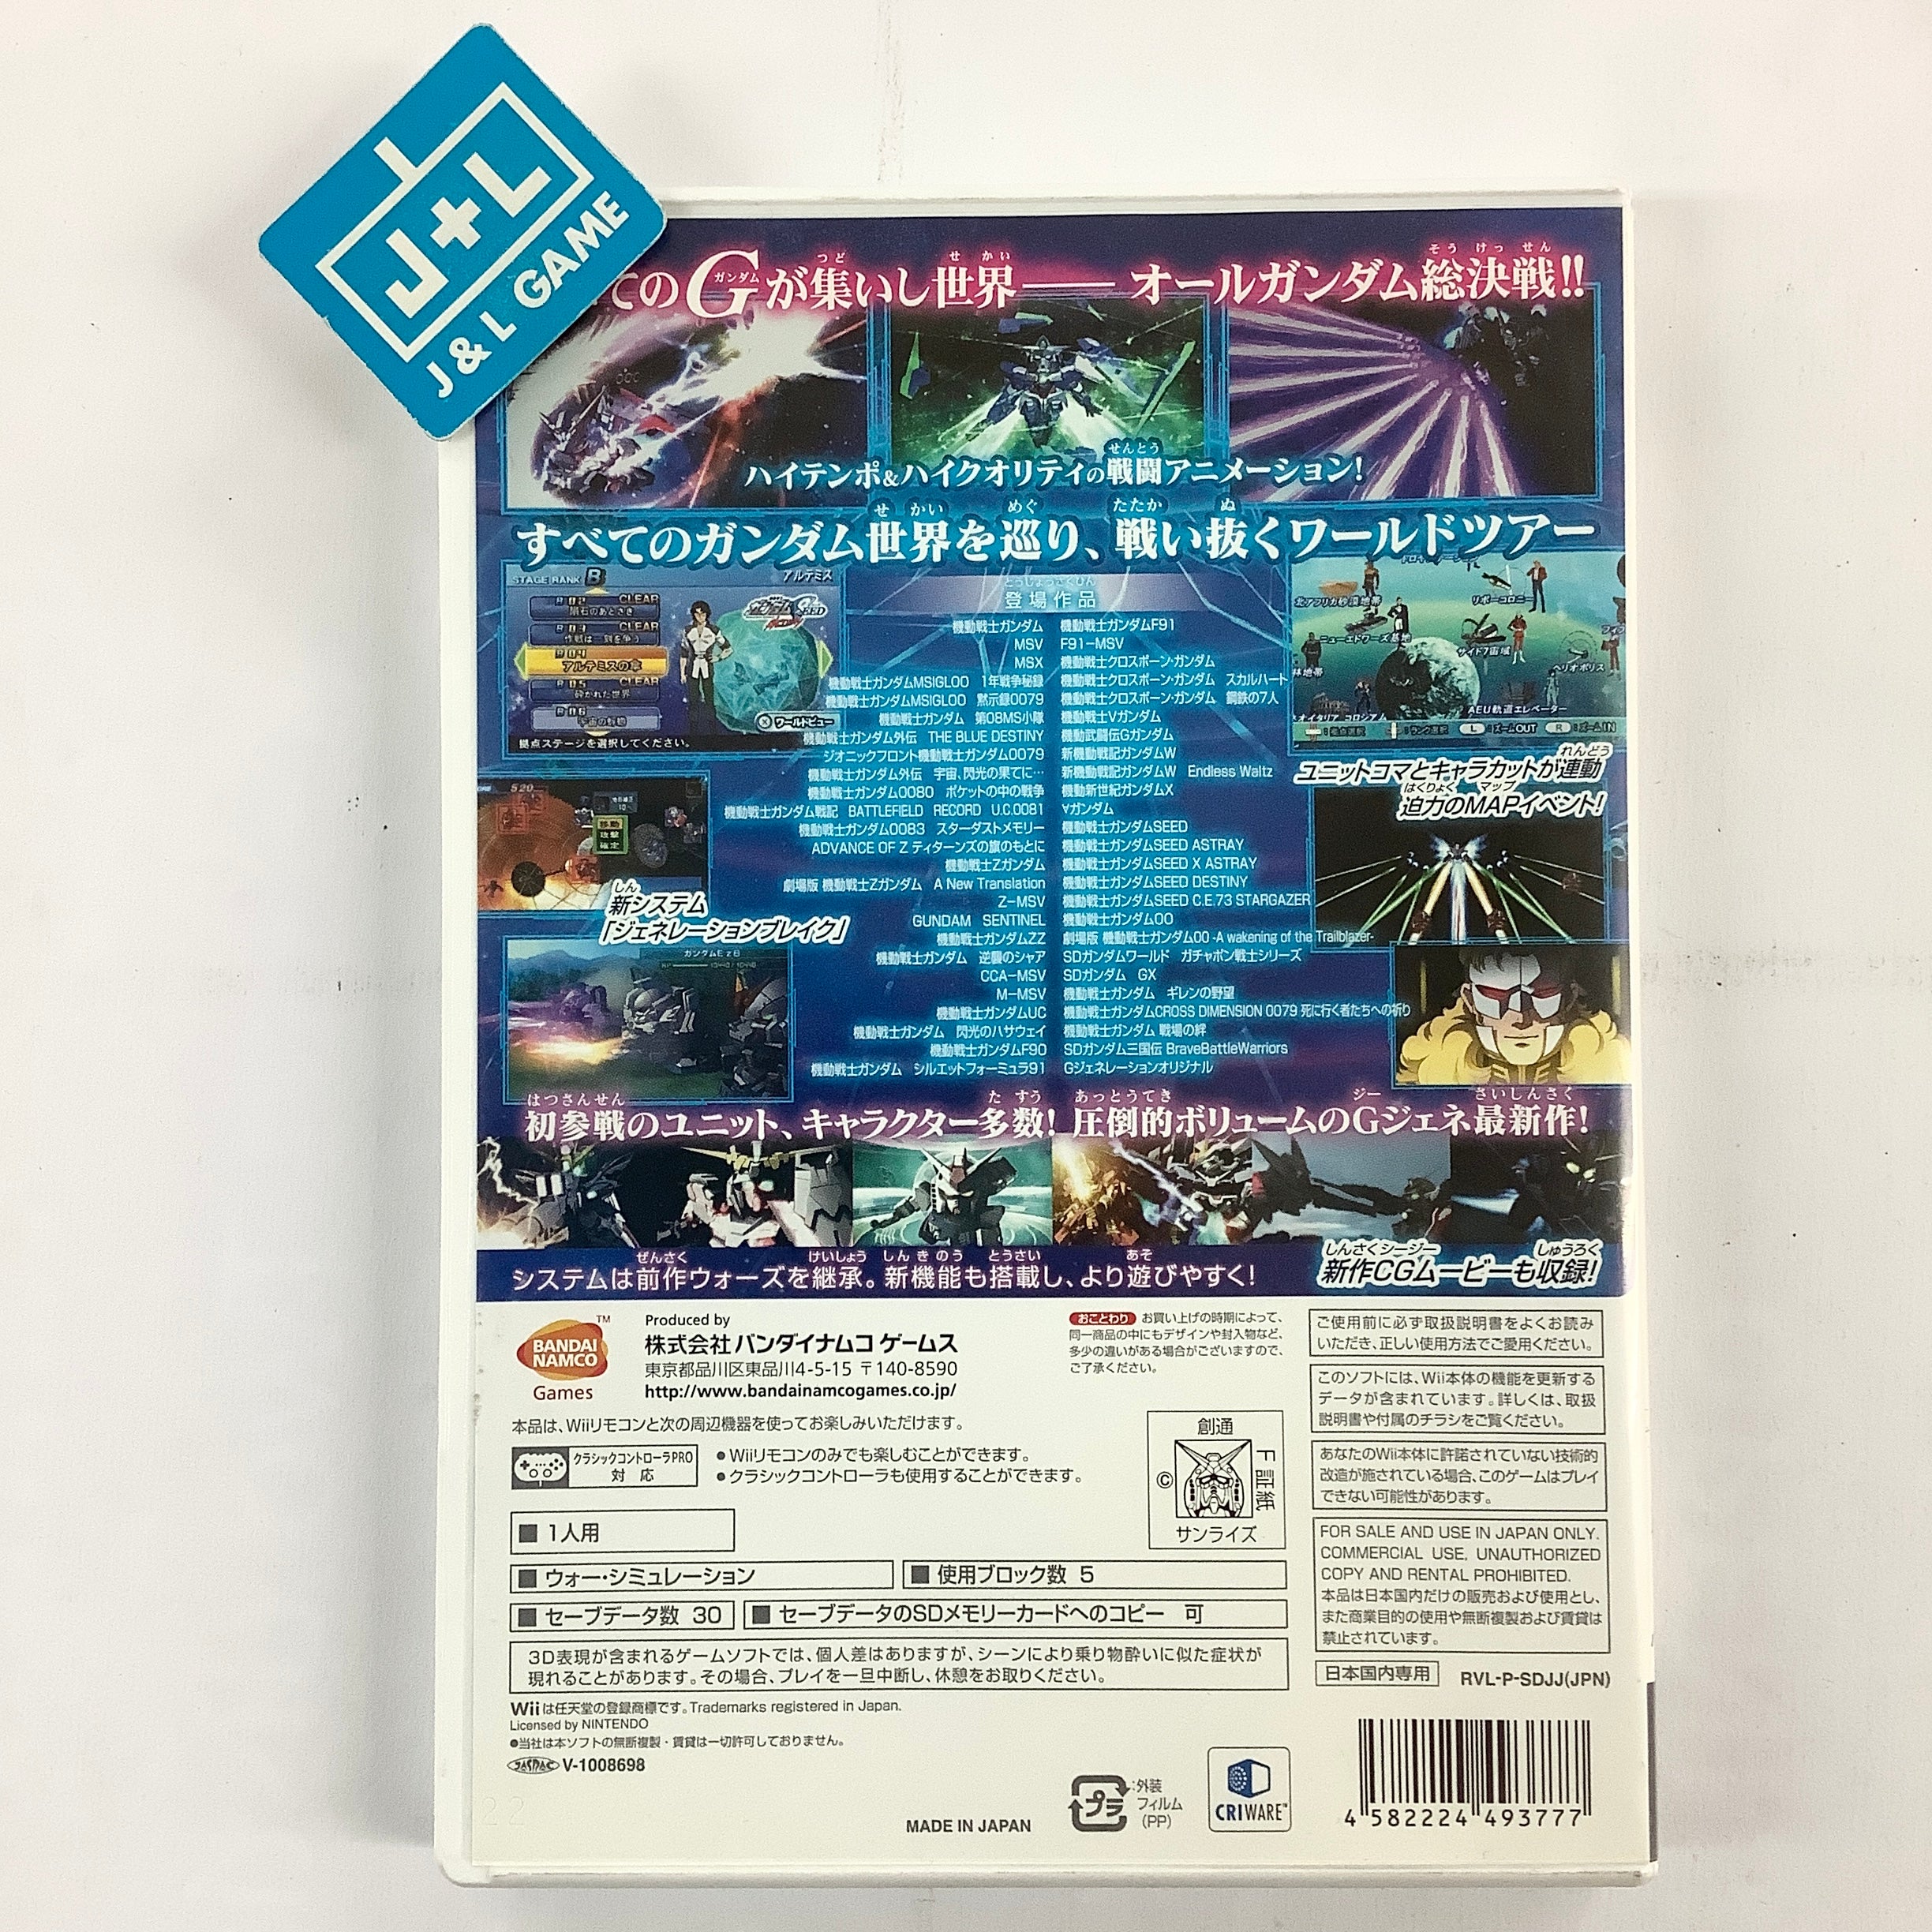 SD Gundam G Generation World - Nintendo Wii [Pre-Owned] (Japanese Import) Video Games Bandai Namco Games   